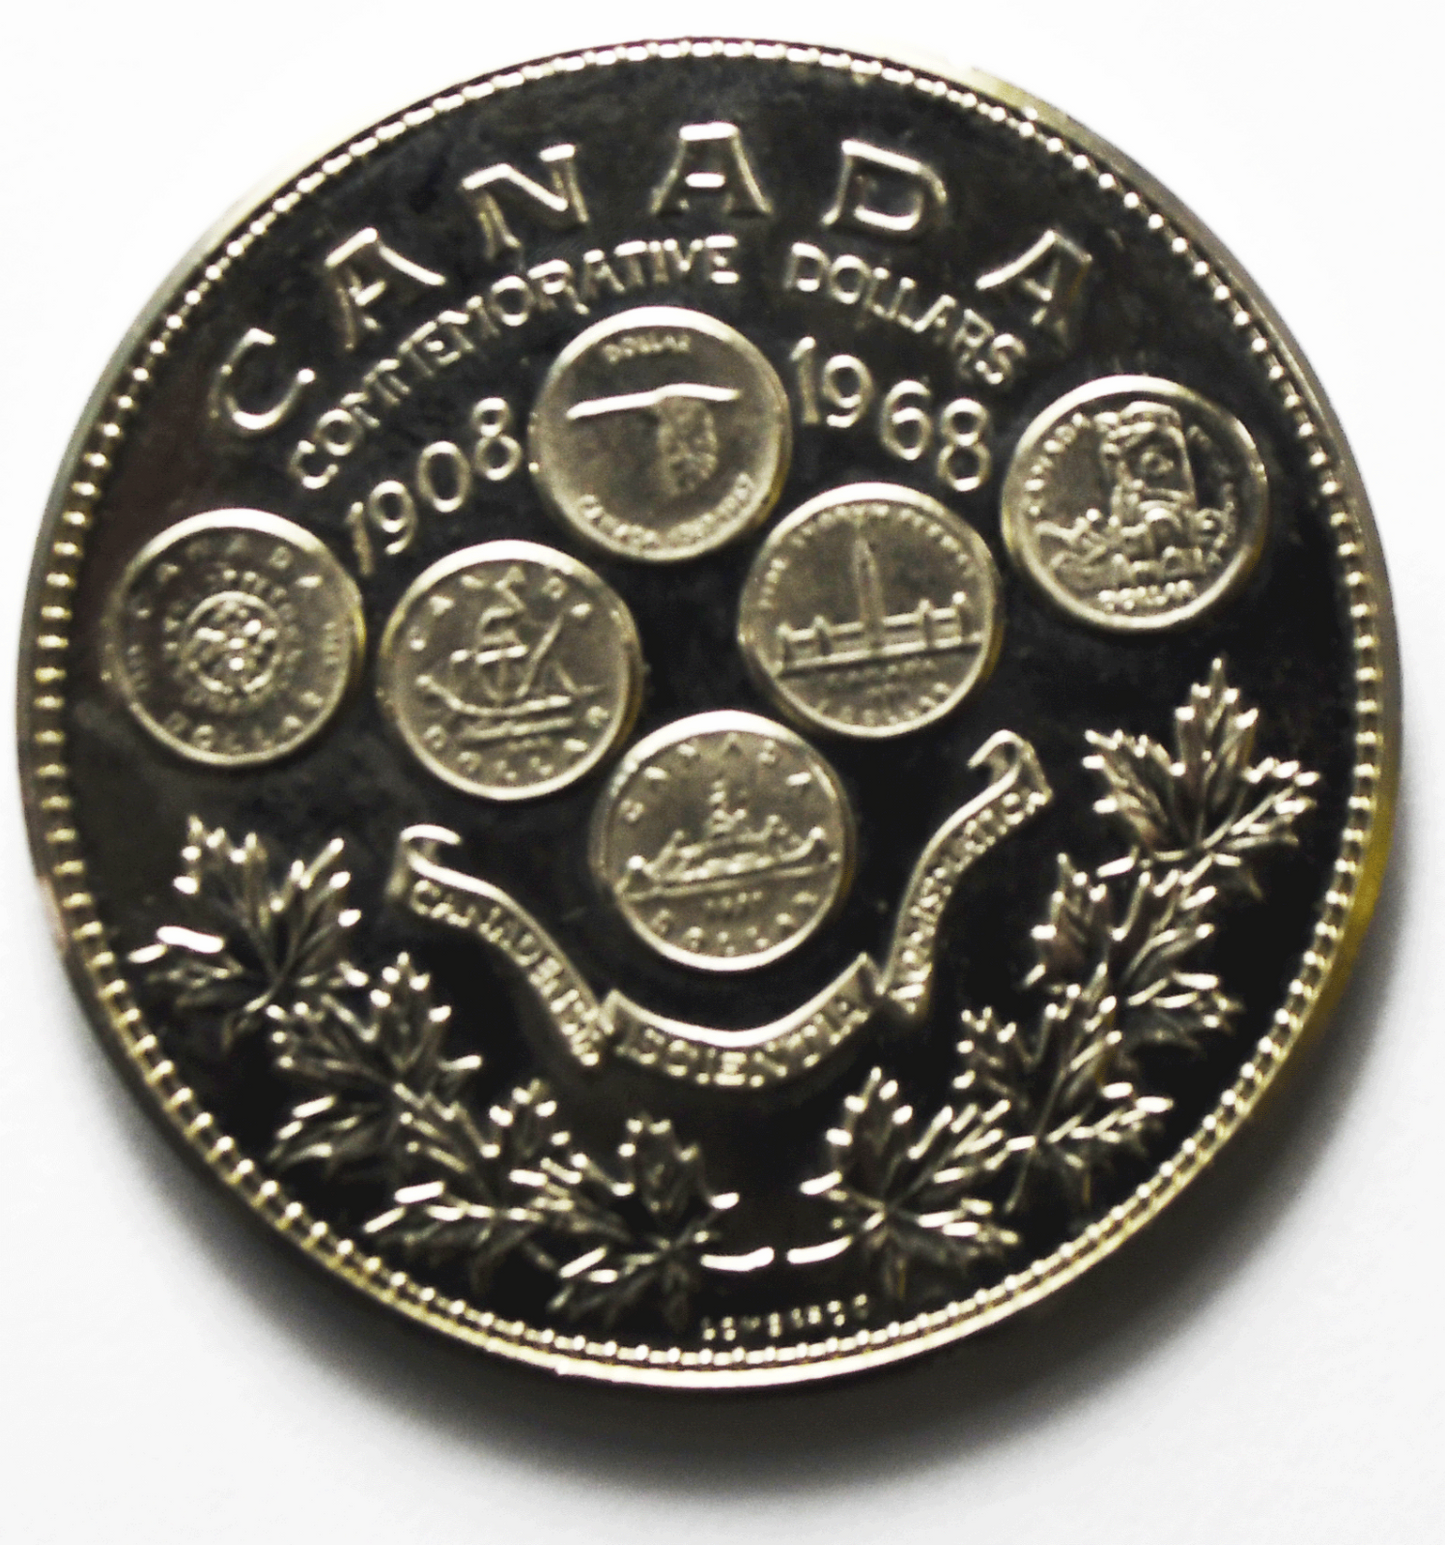 1968 Canada Proof Commemorative 60 Years Numismatic Dollar 38mm